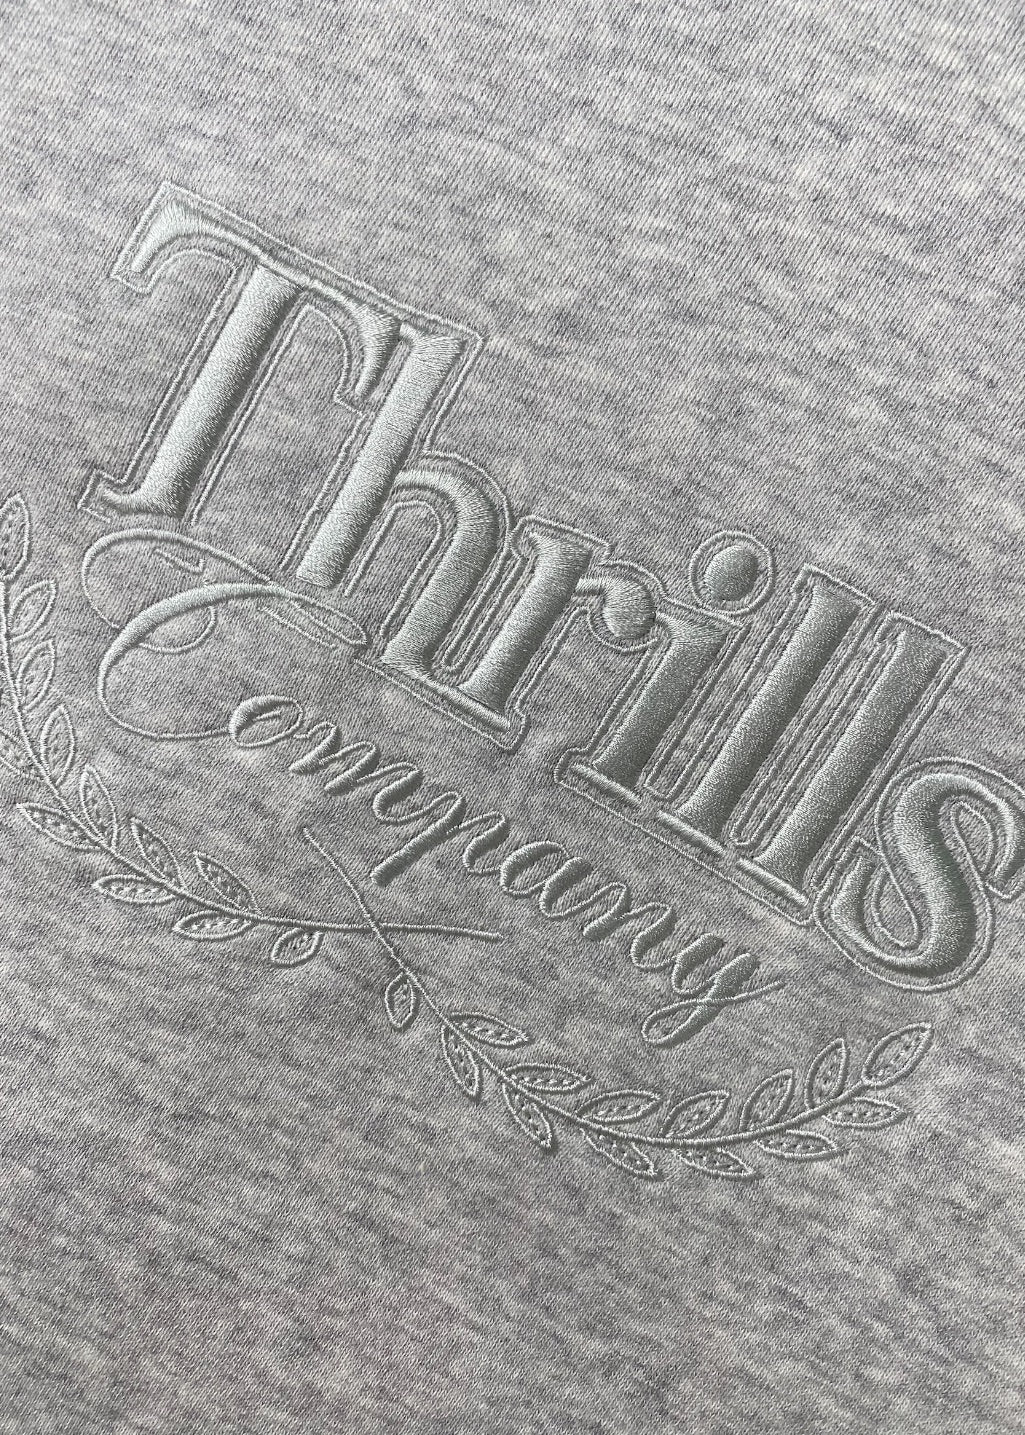 THRILLS - Bad Members Embro Slouch Crew Neck Fleece - Snow Marle - Hardpressed Print Studio Inc.